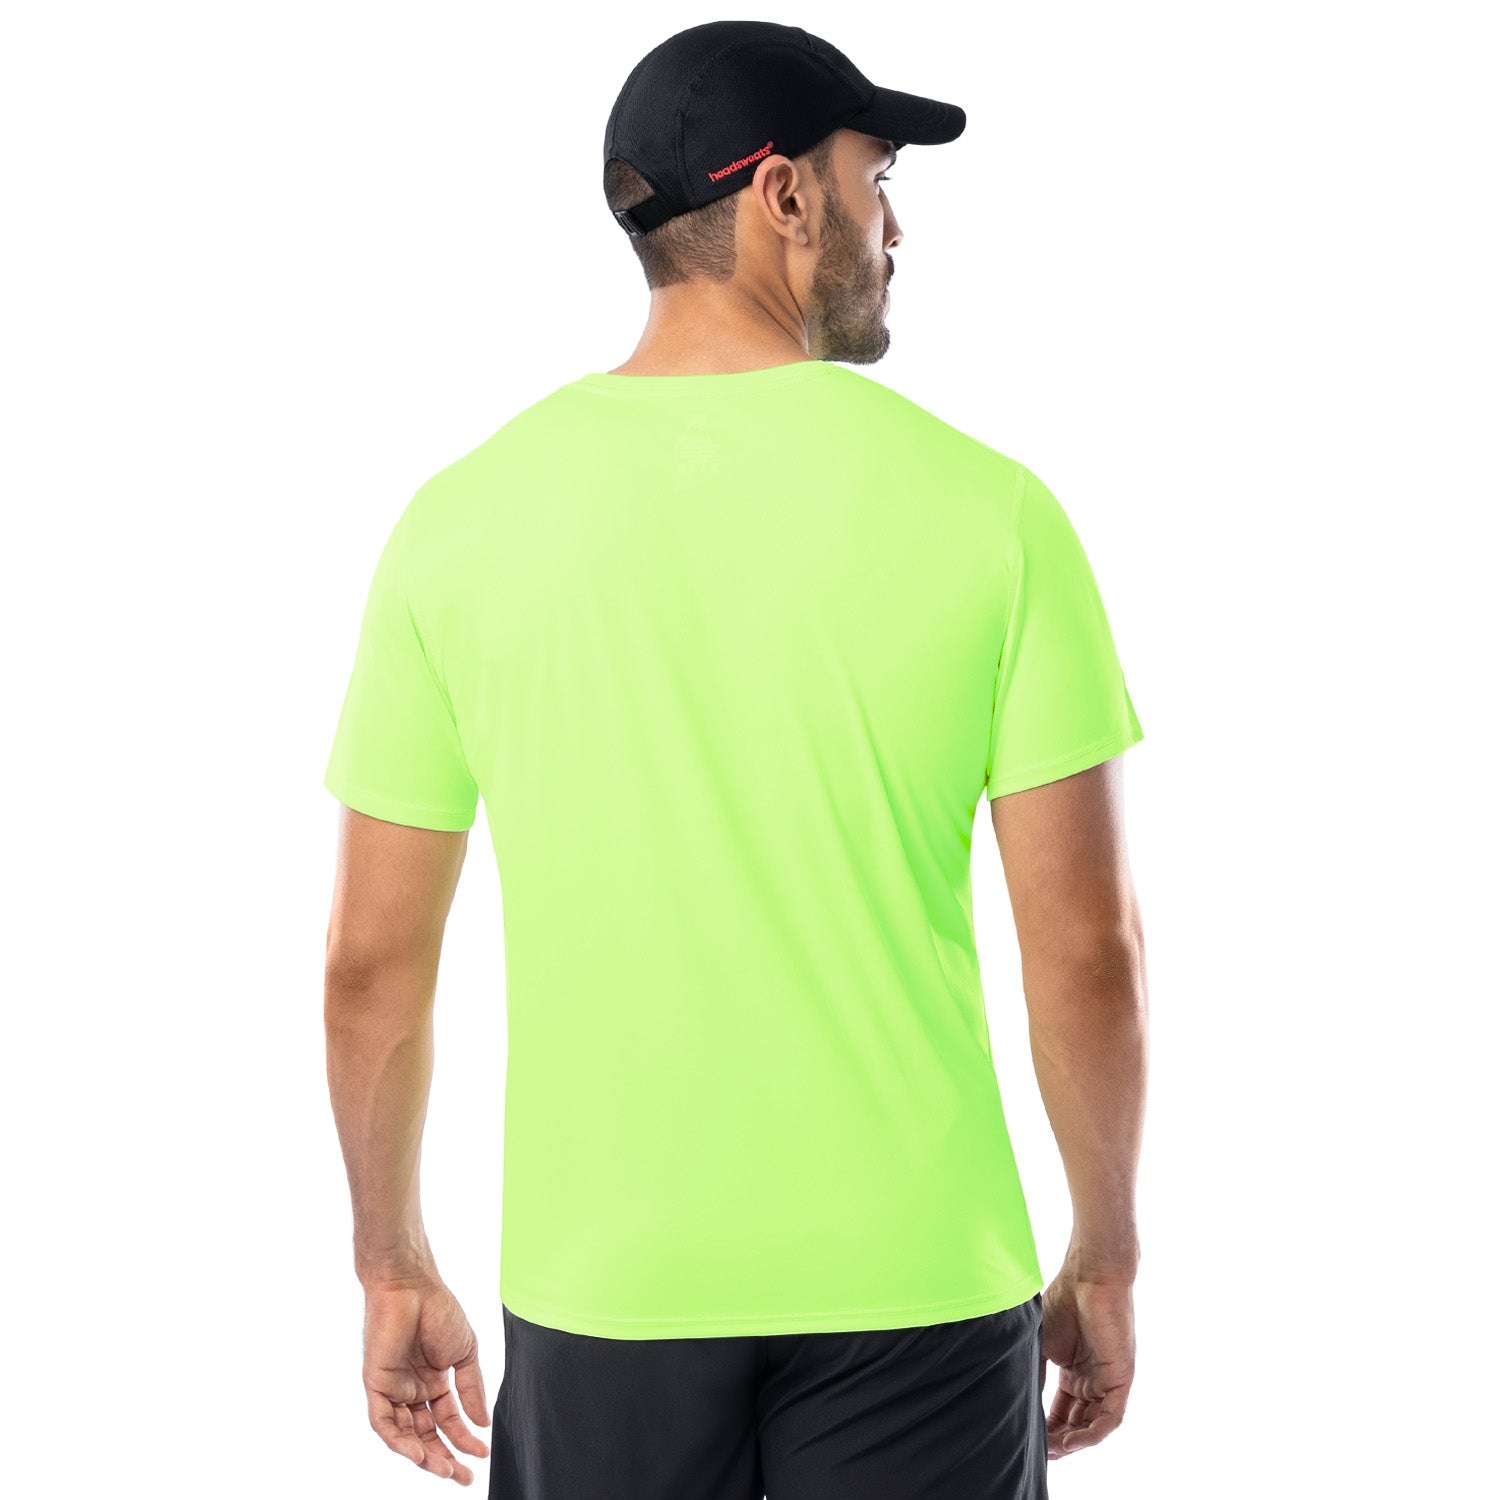 Men's Yellow Reflective Training T-Shirt Back View